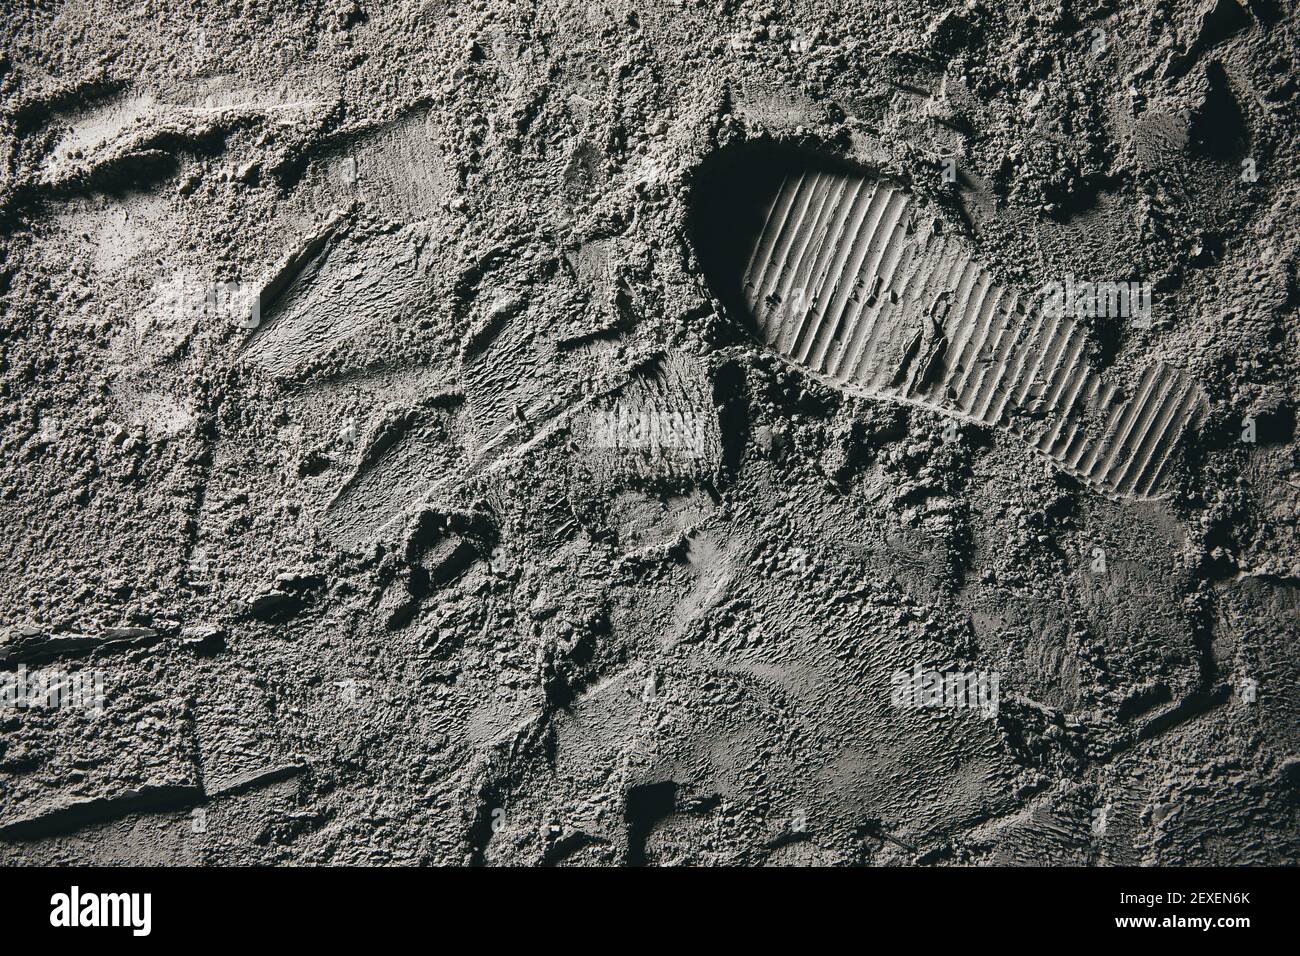 Следы луны 15 глава вк. Следы на Луне. Moon footprint. Footprint on the Moon. Макросъемка следов.